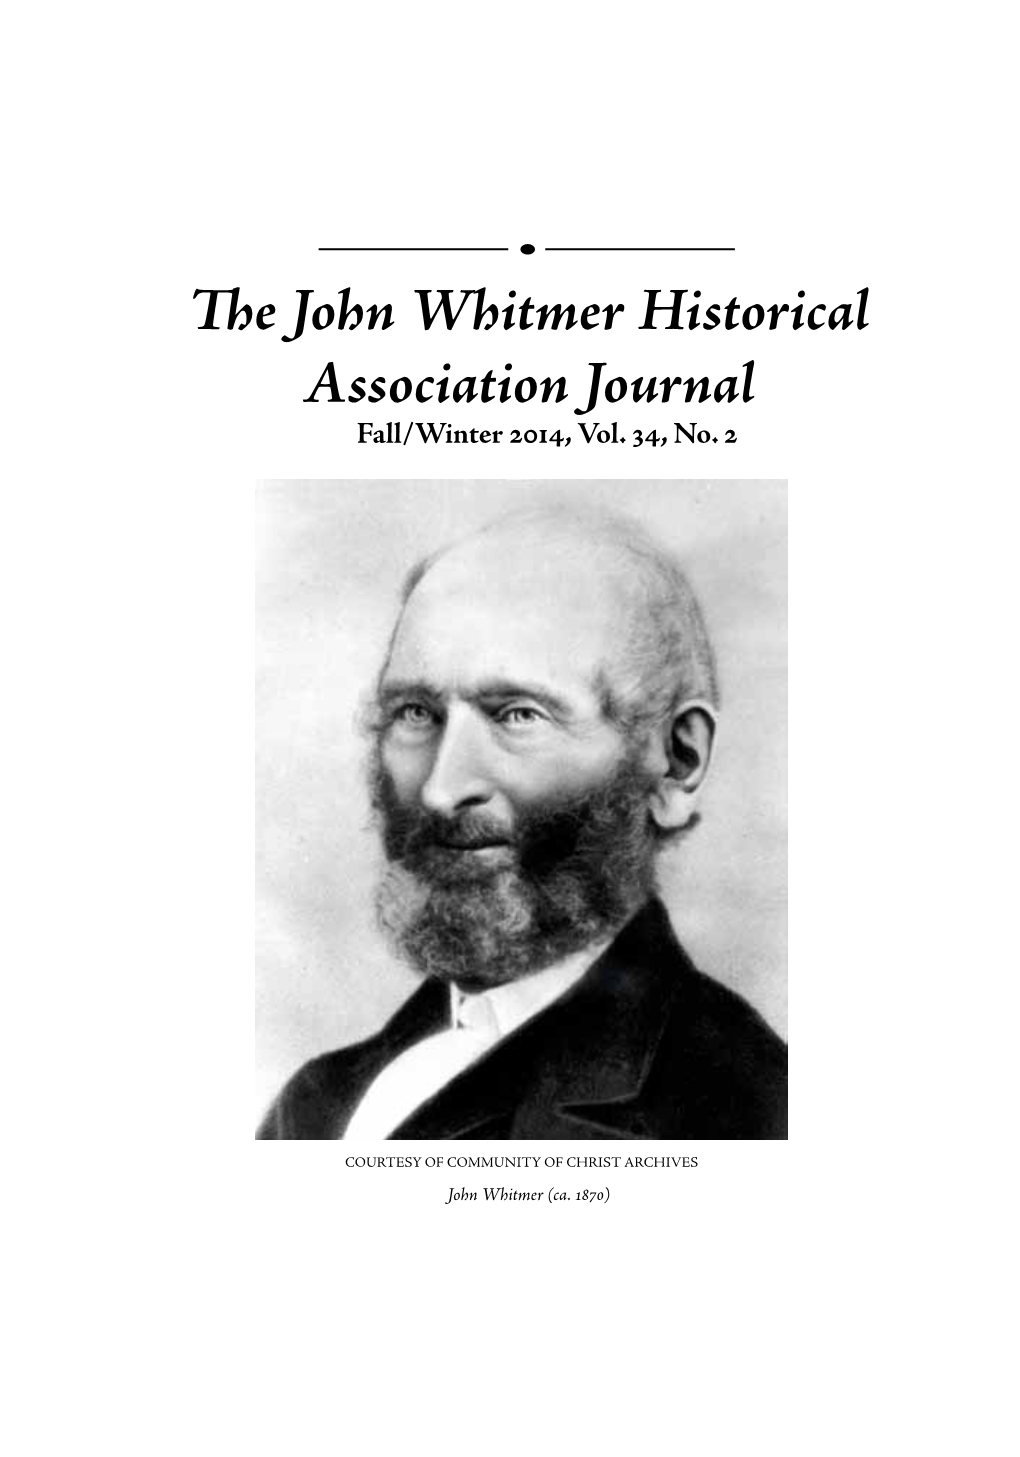 The John Whitmer Historical Association Journal Fall/Winter 2014, Vol